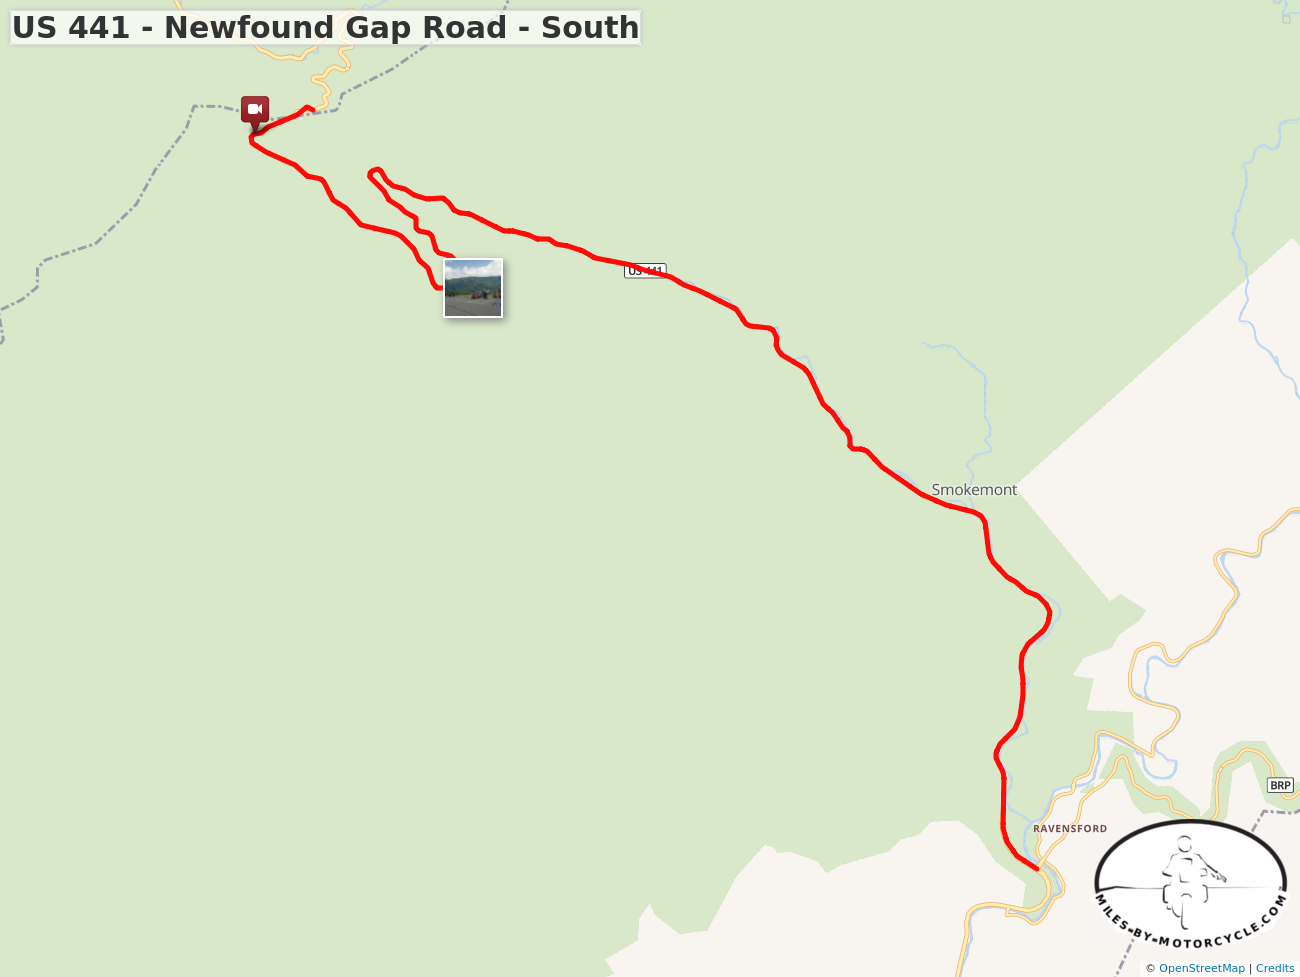 US 441 - Newfound Gap Road - South